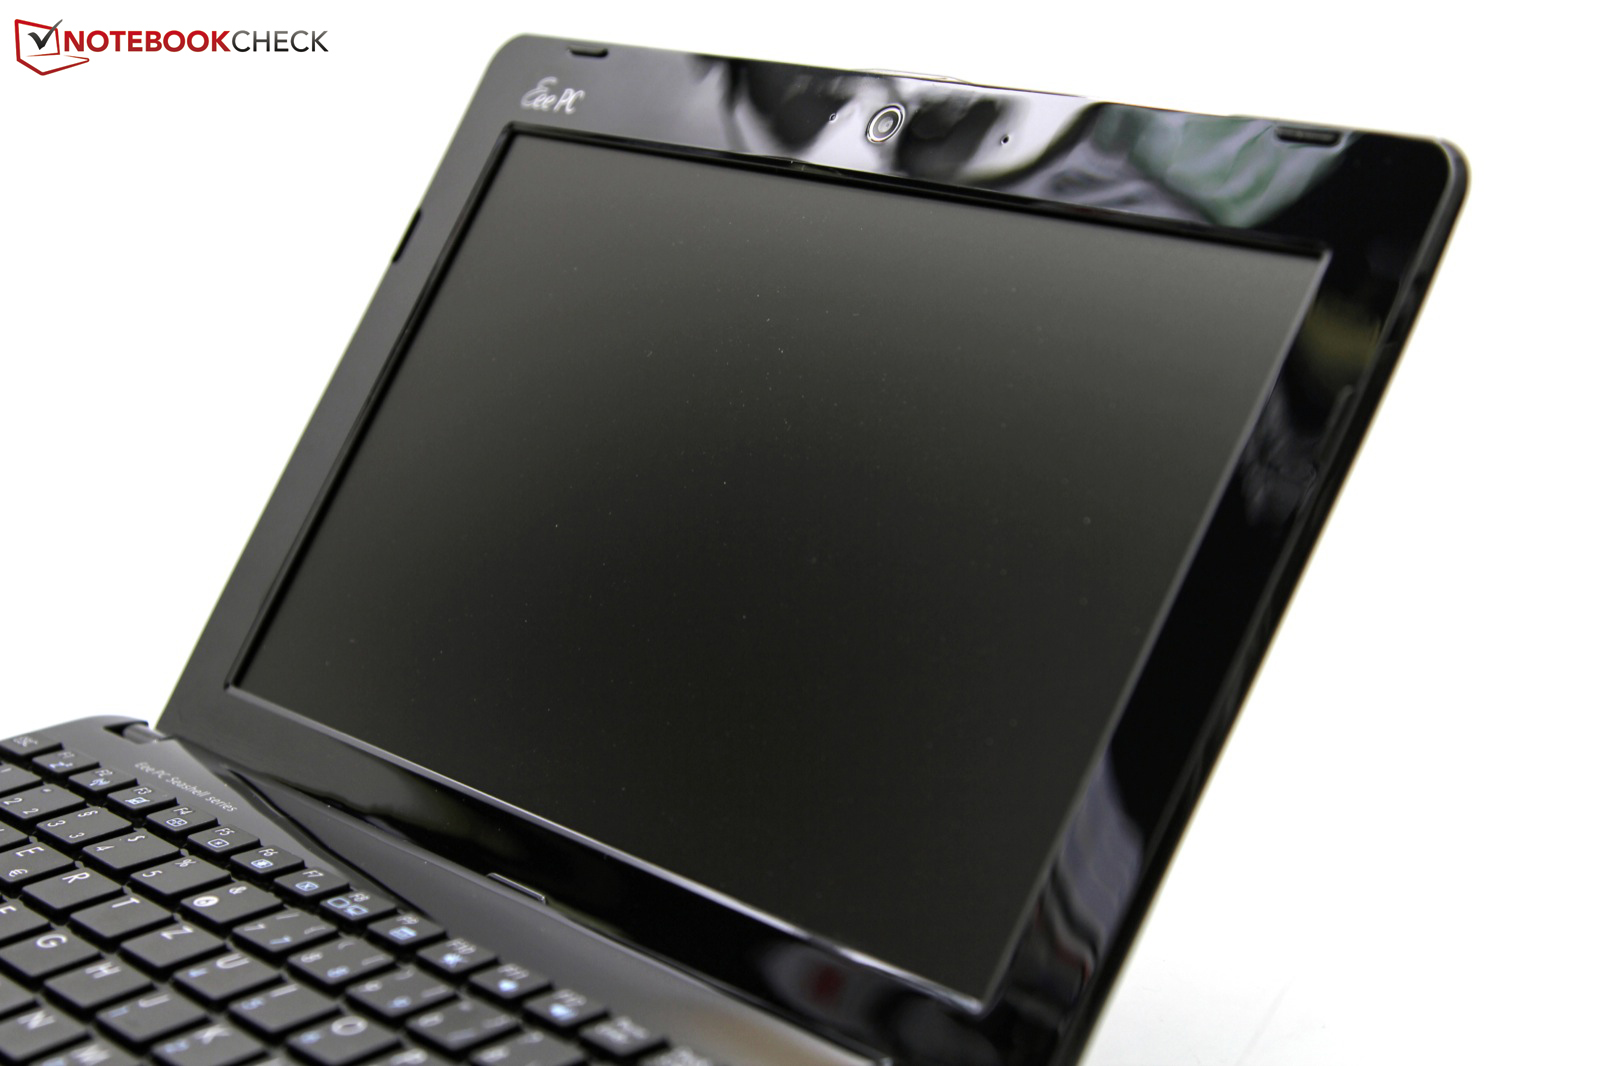 Eee PC 1011CX Netbook - NotebookCheck.net Reviews